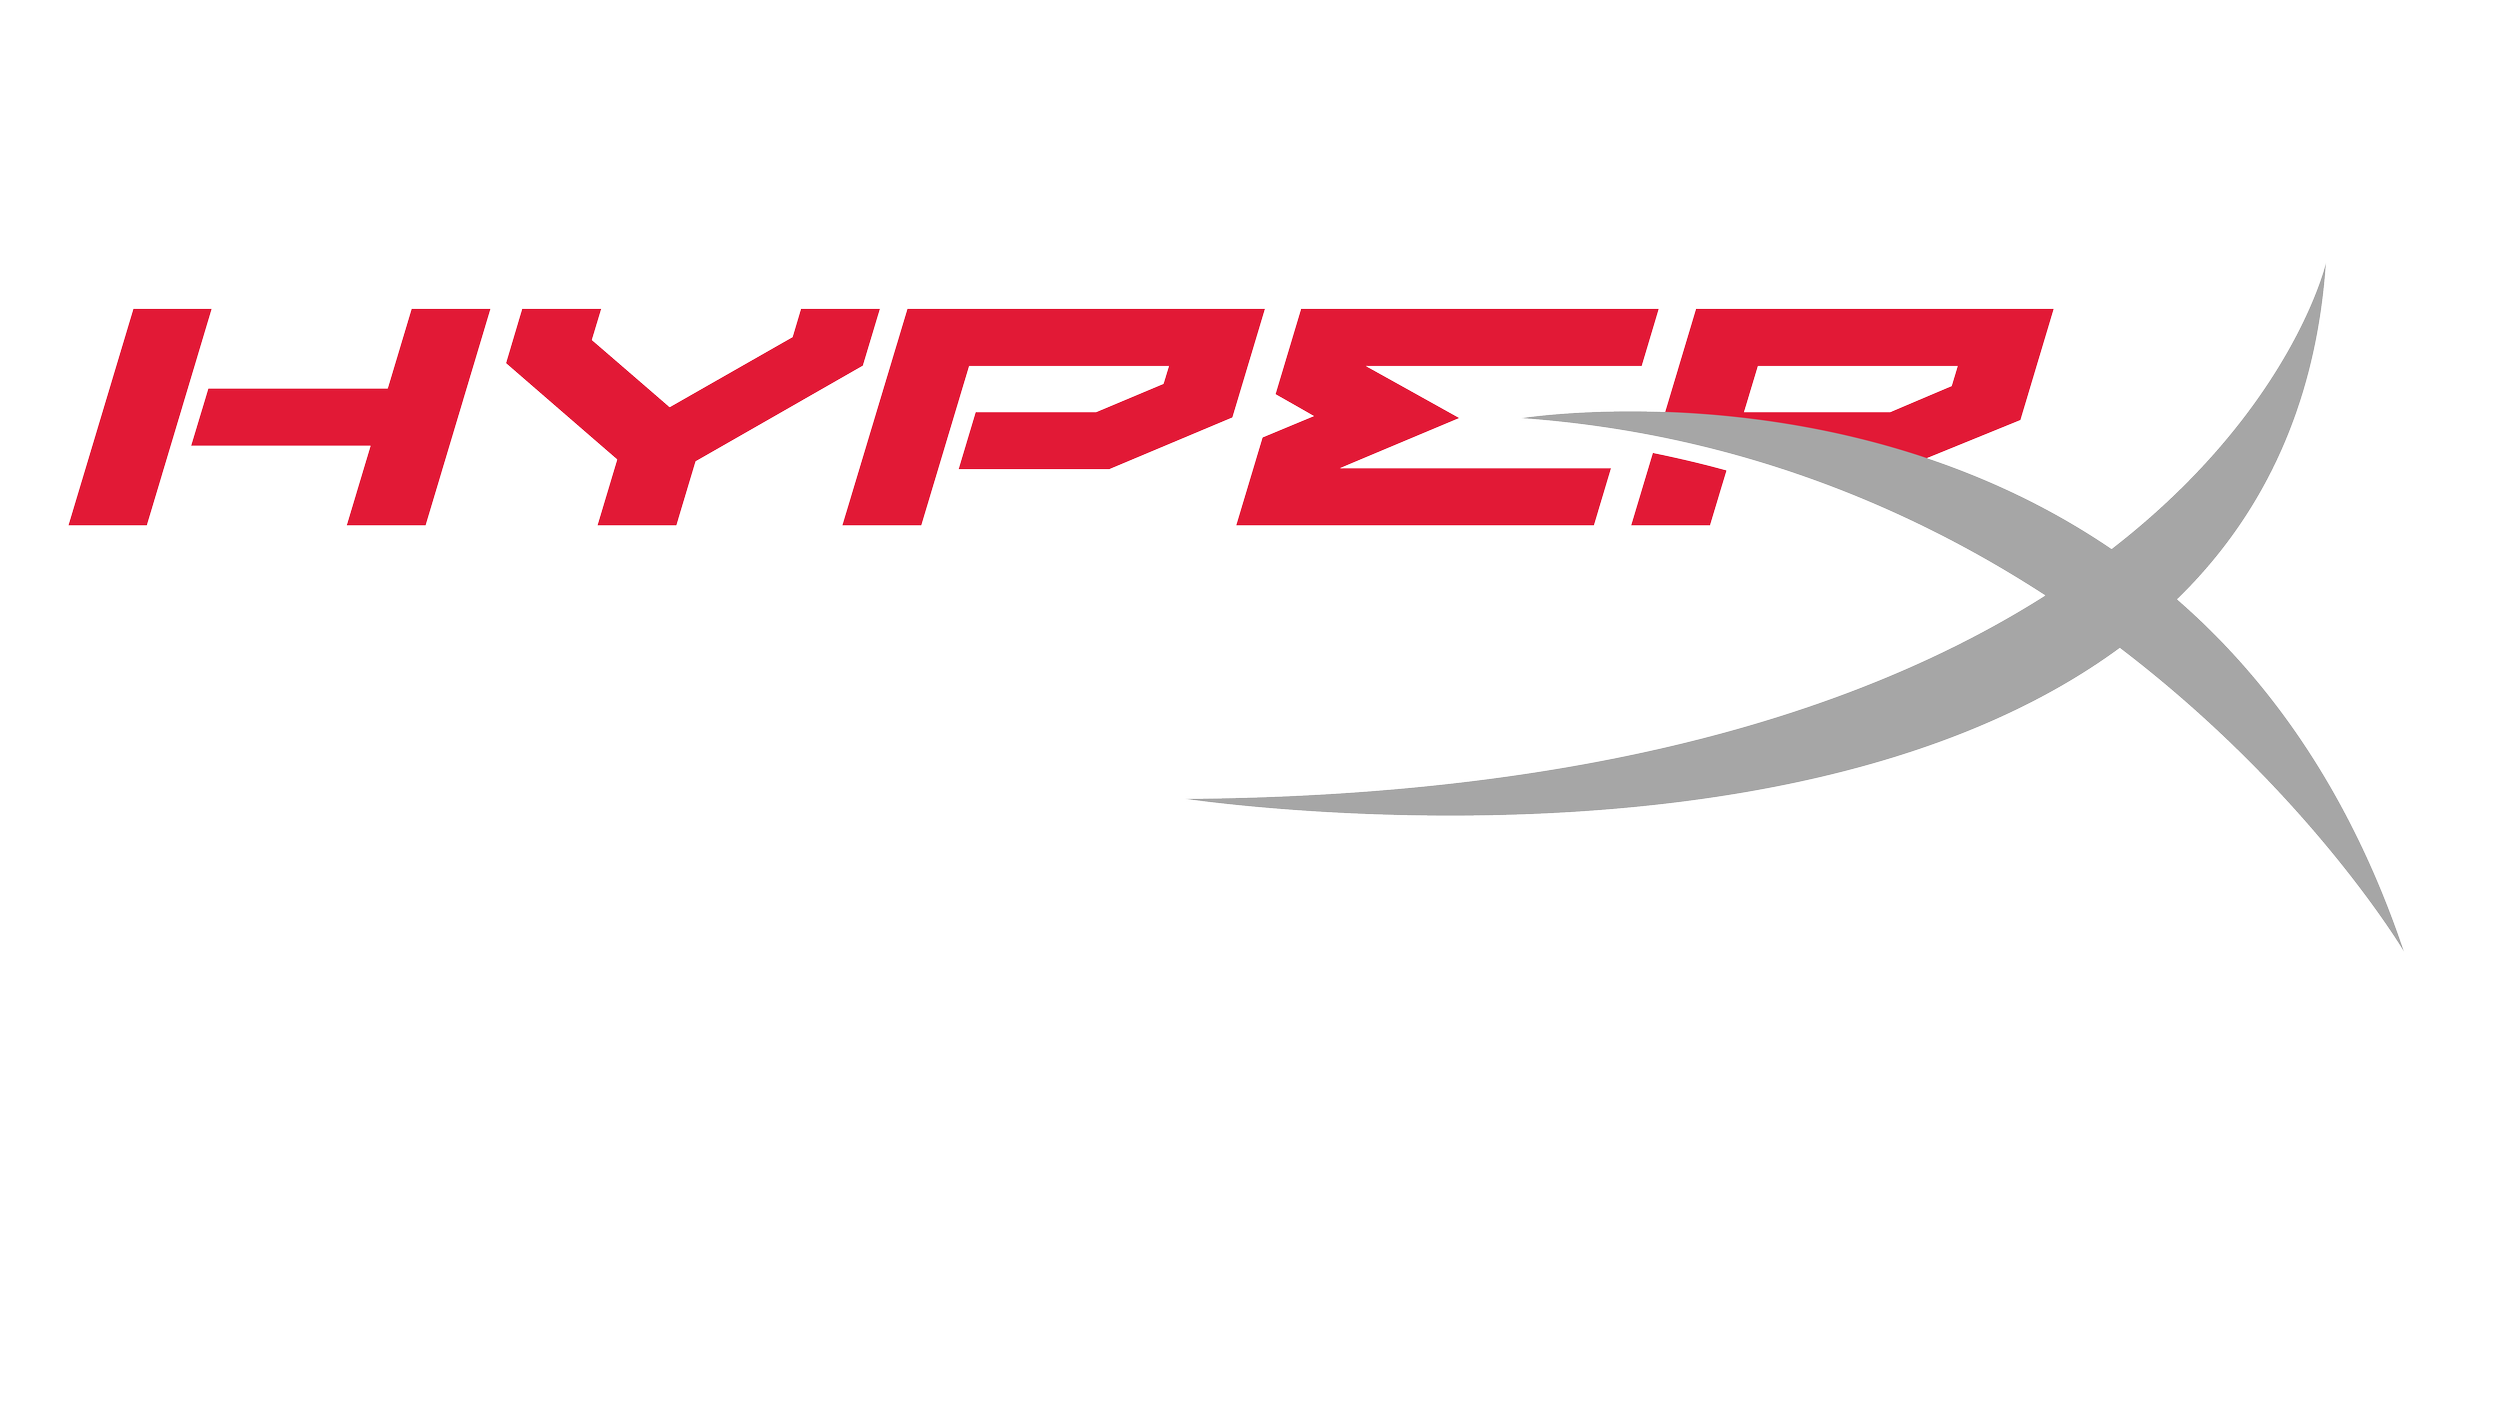 HyperX Arena Las Vegas at the Luxor